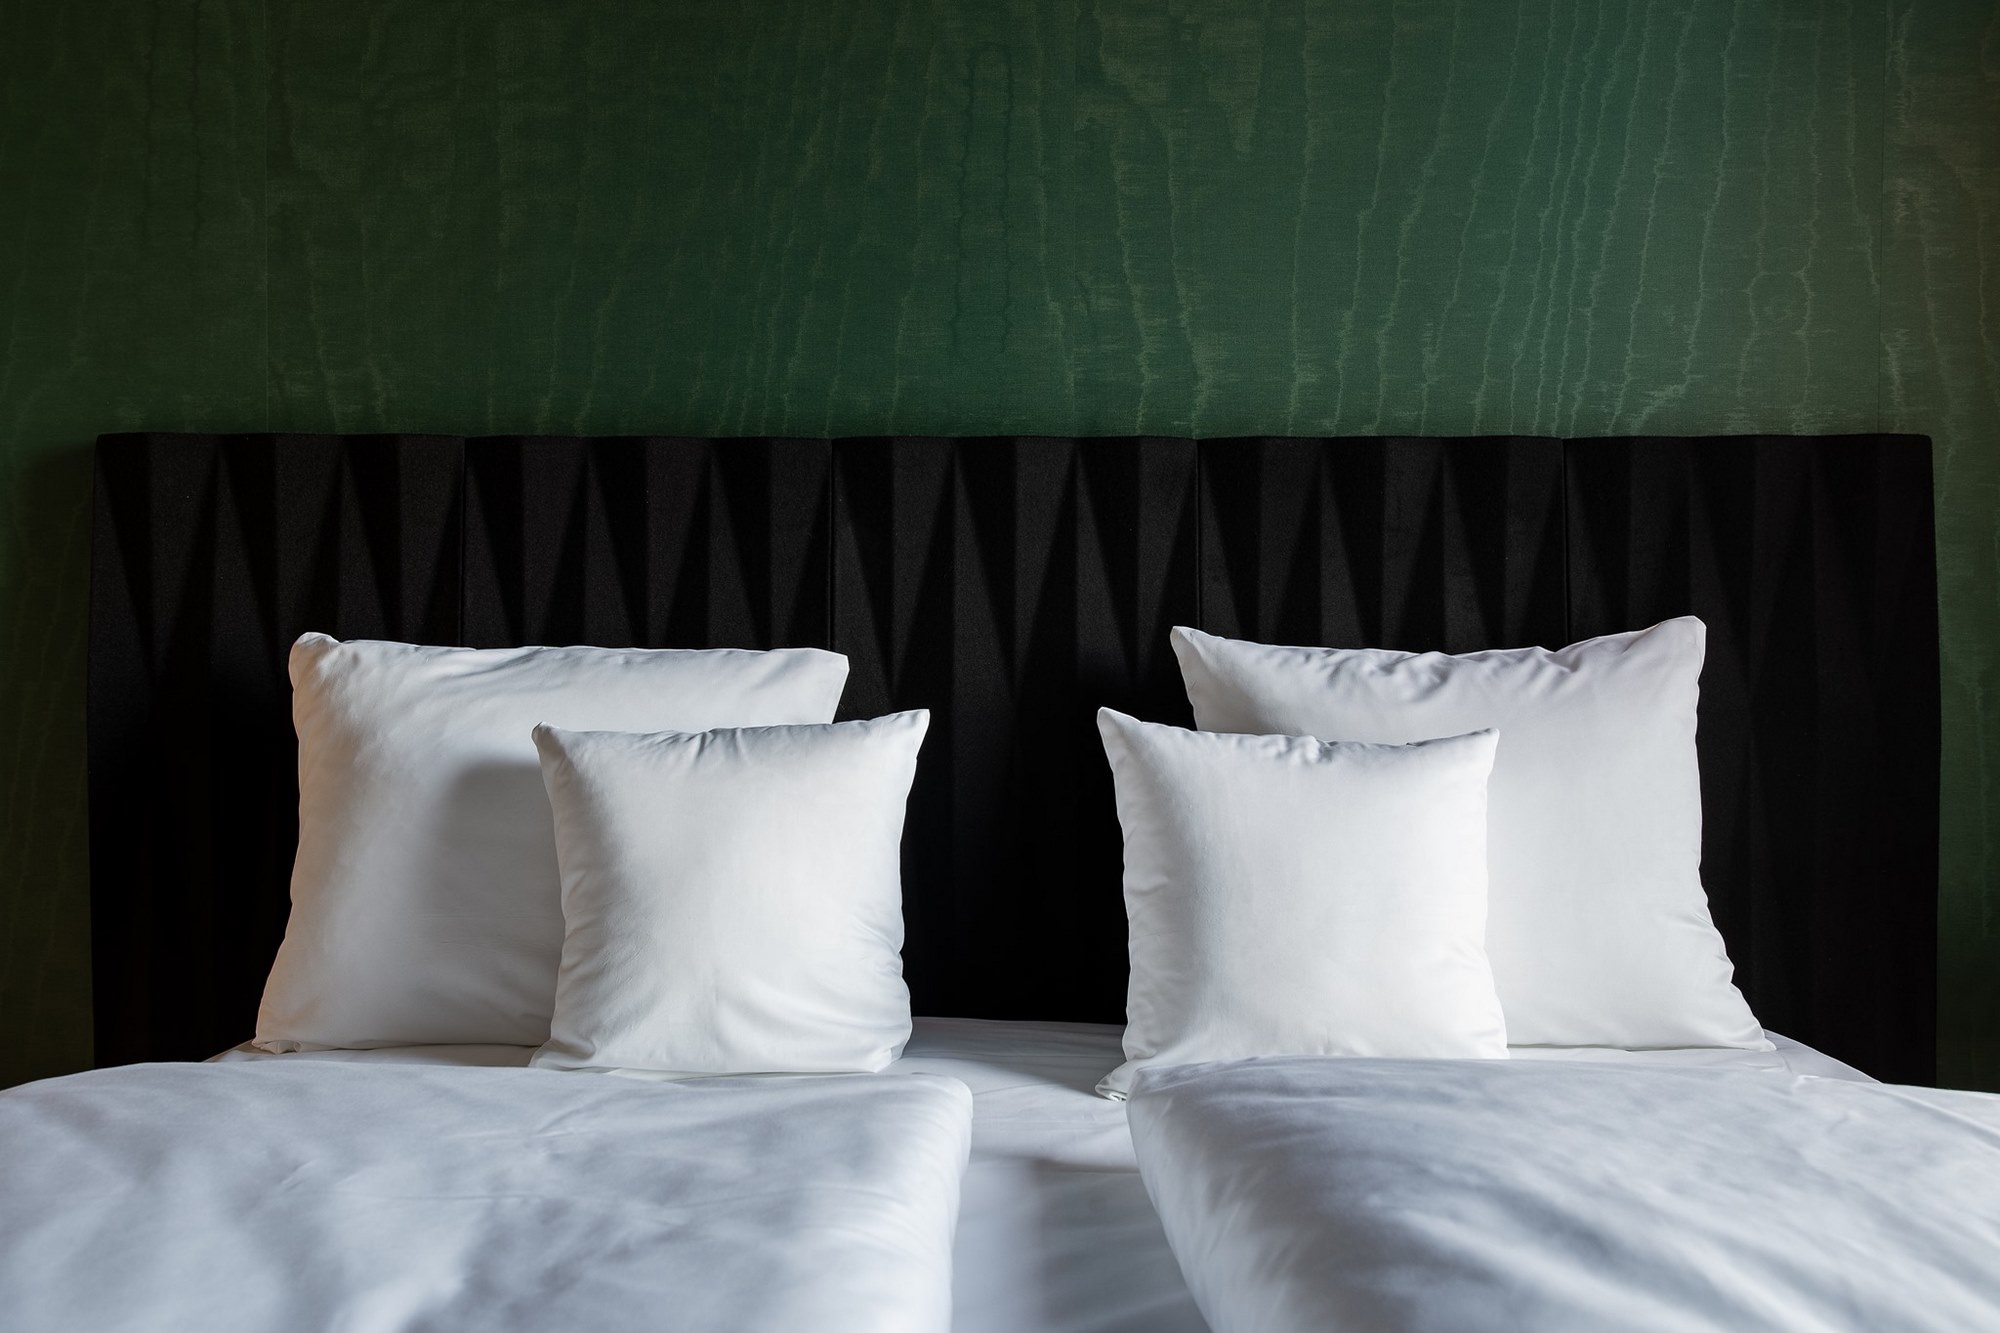 VANK_DIAMOND panels as a hotel bed headboard